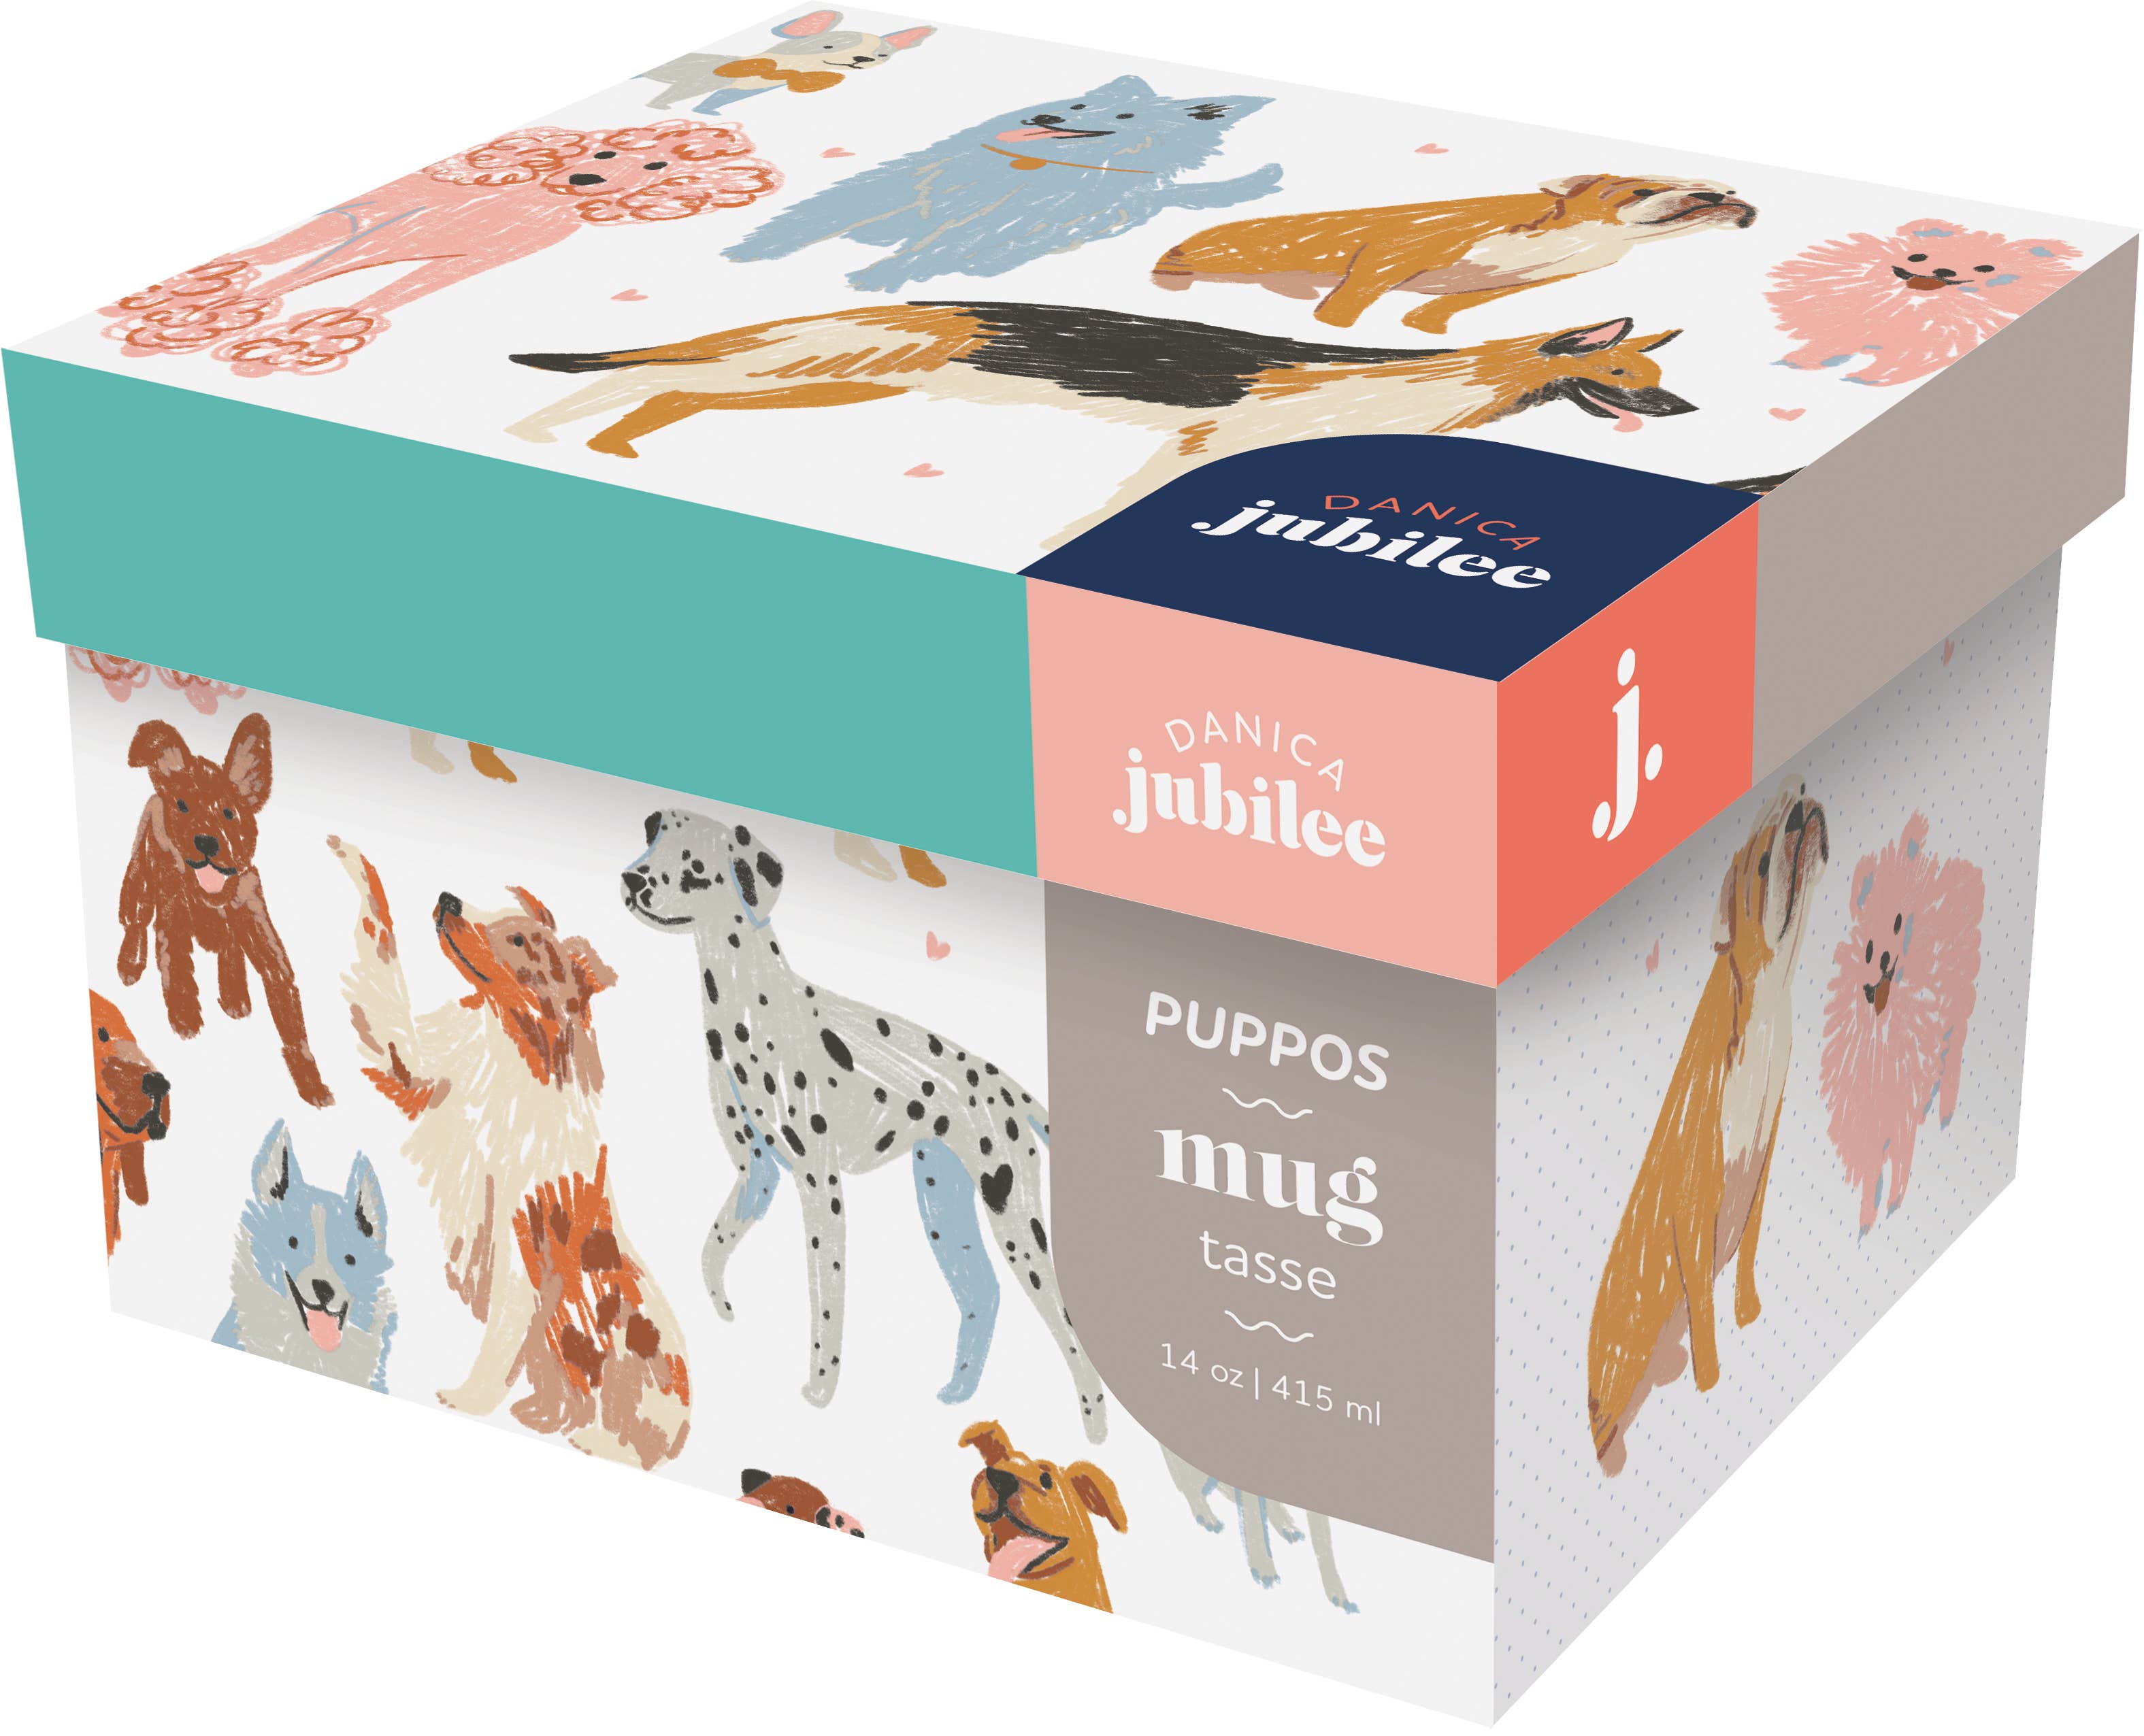 Danica Jubilee - Puppos Mug in a box